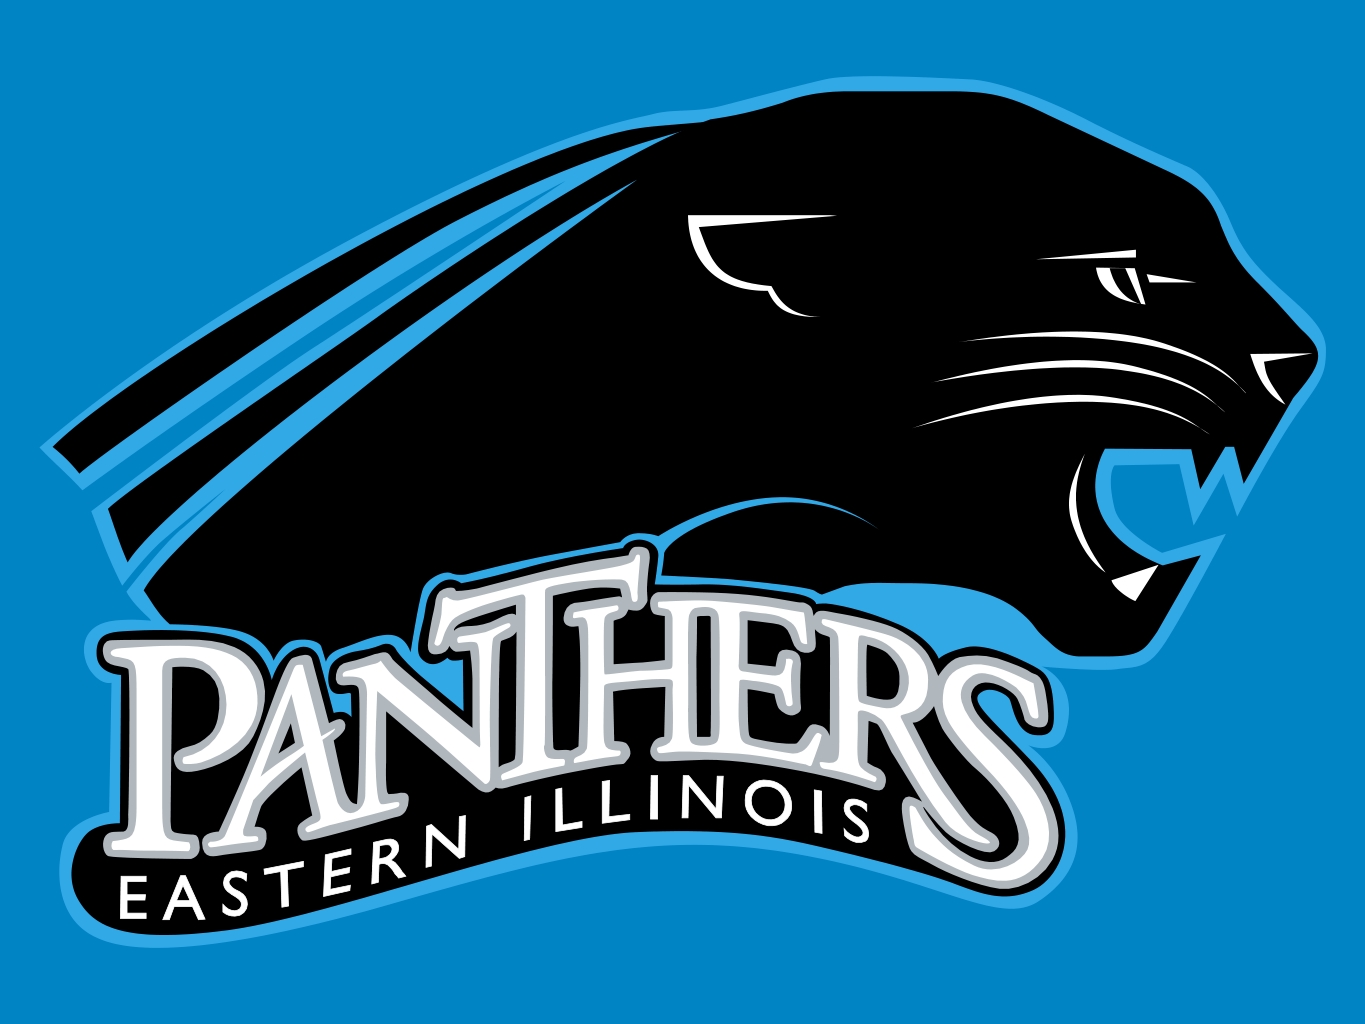 Eastern illinois, Panthers and Illinois